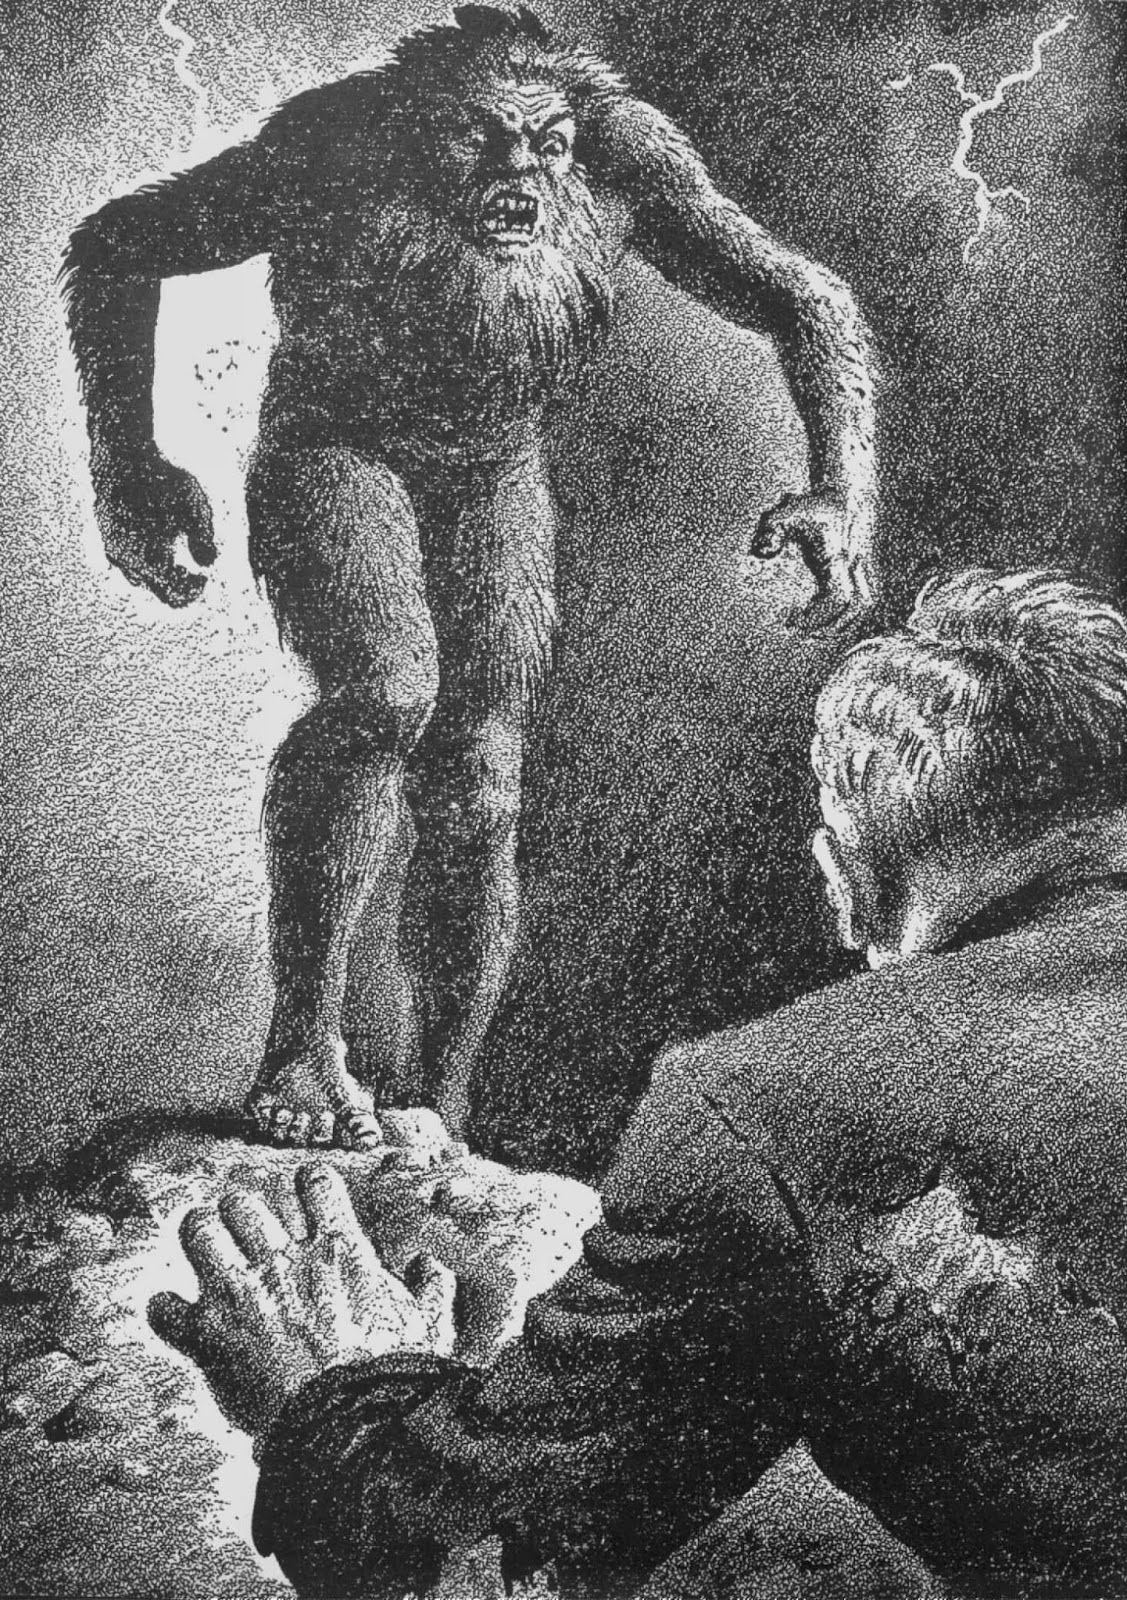 The Big Grey Man of Ben Macdhui – Britain’s very own Bigfoot?